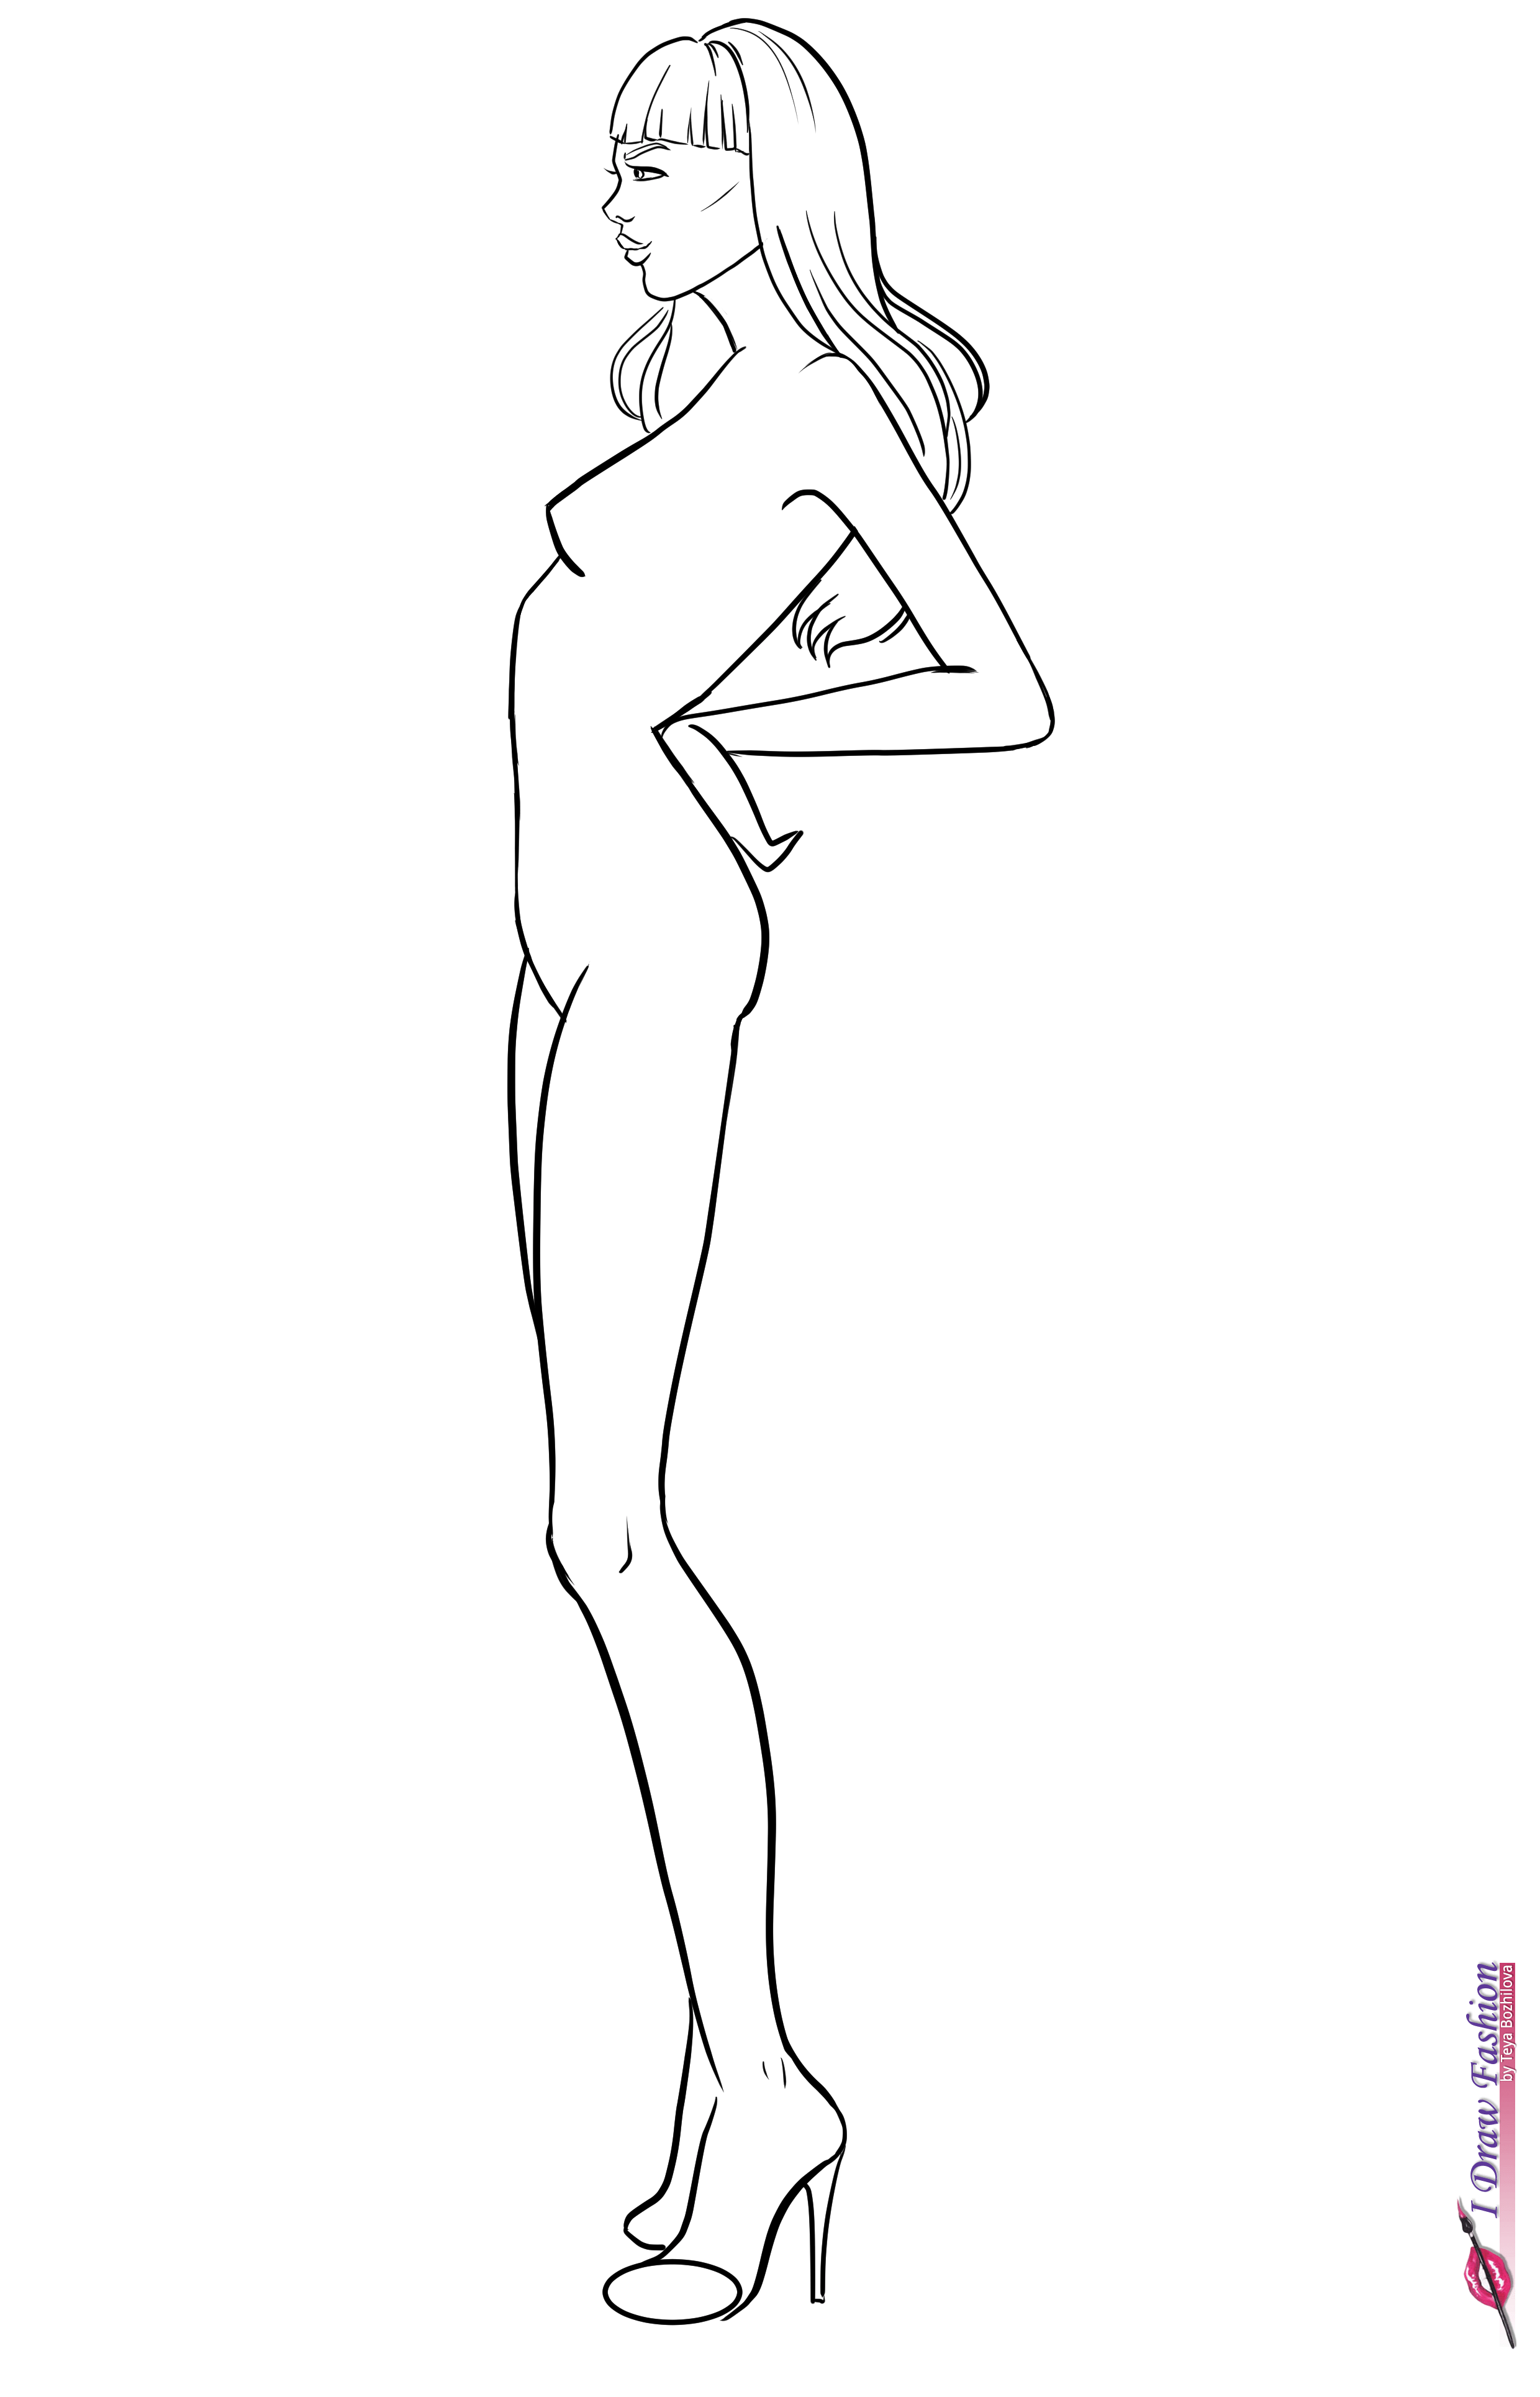 How to draw side view pose | I Draw Fashion